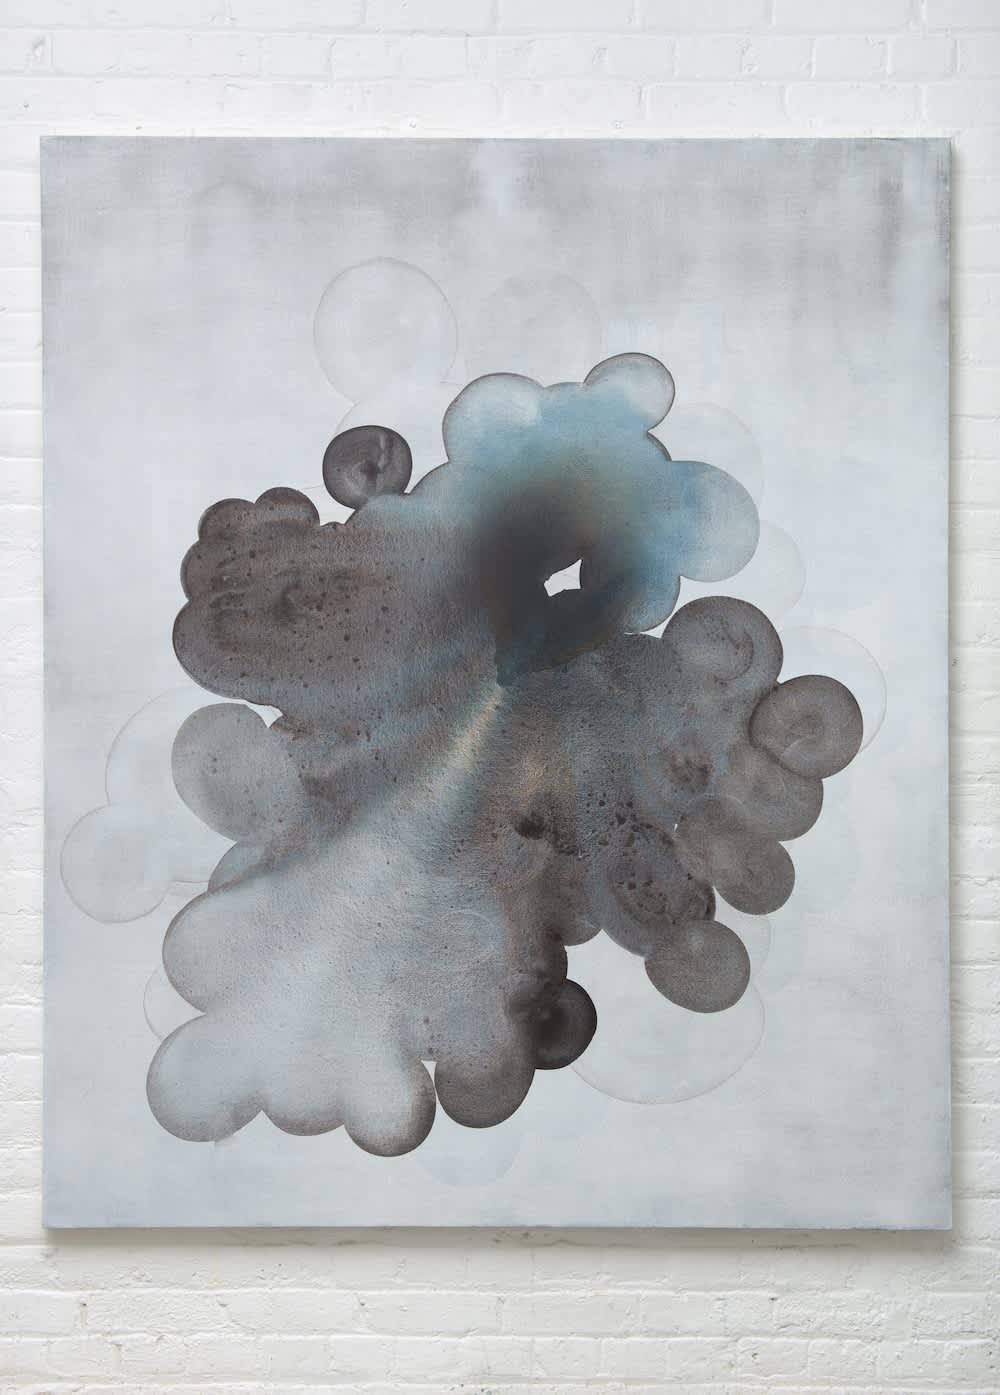 Sarah Kogan, Freefall, 2019, Acrylic on canvas